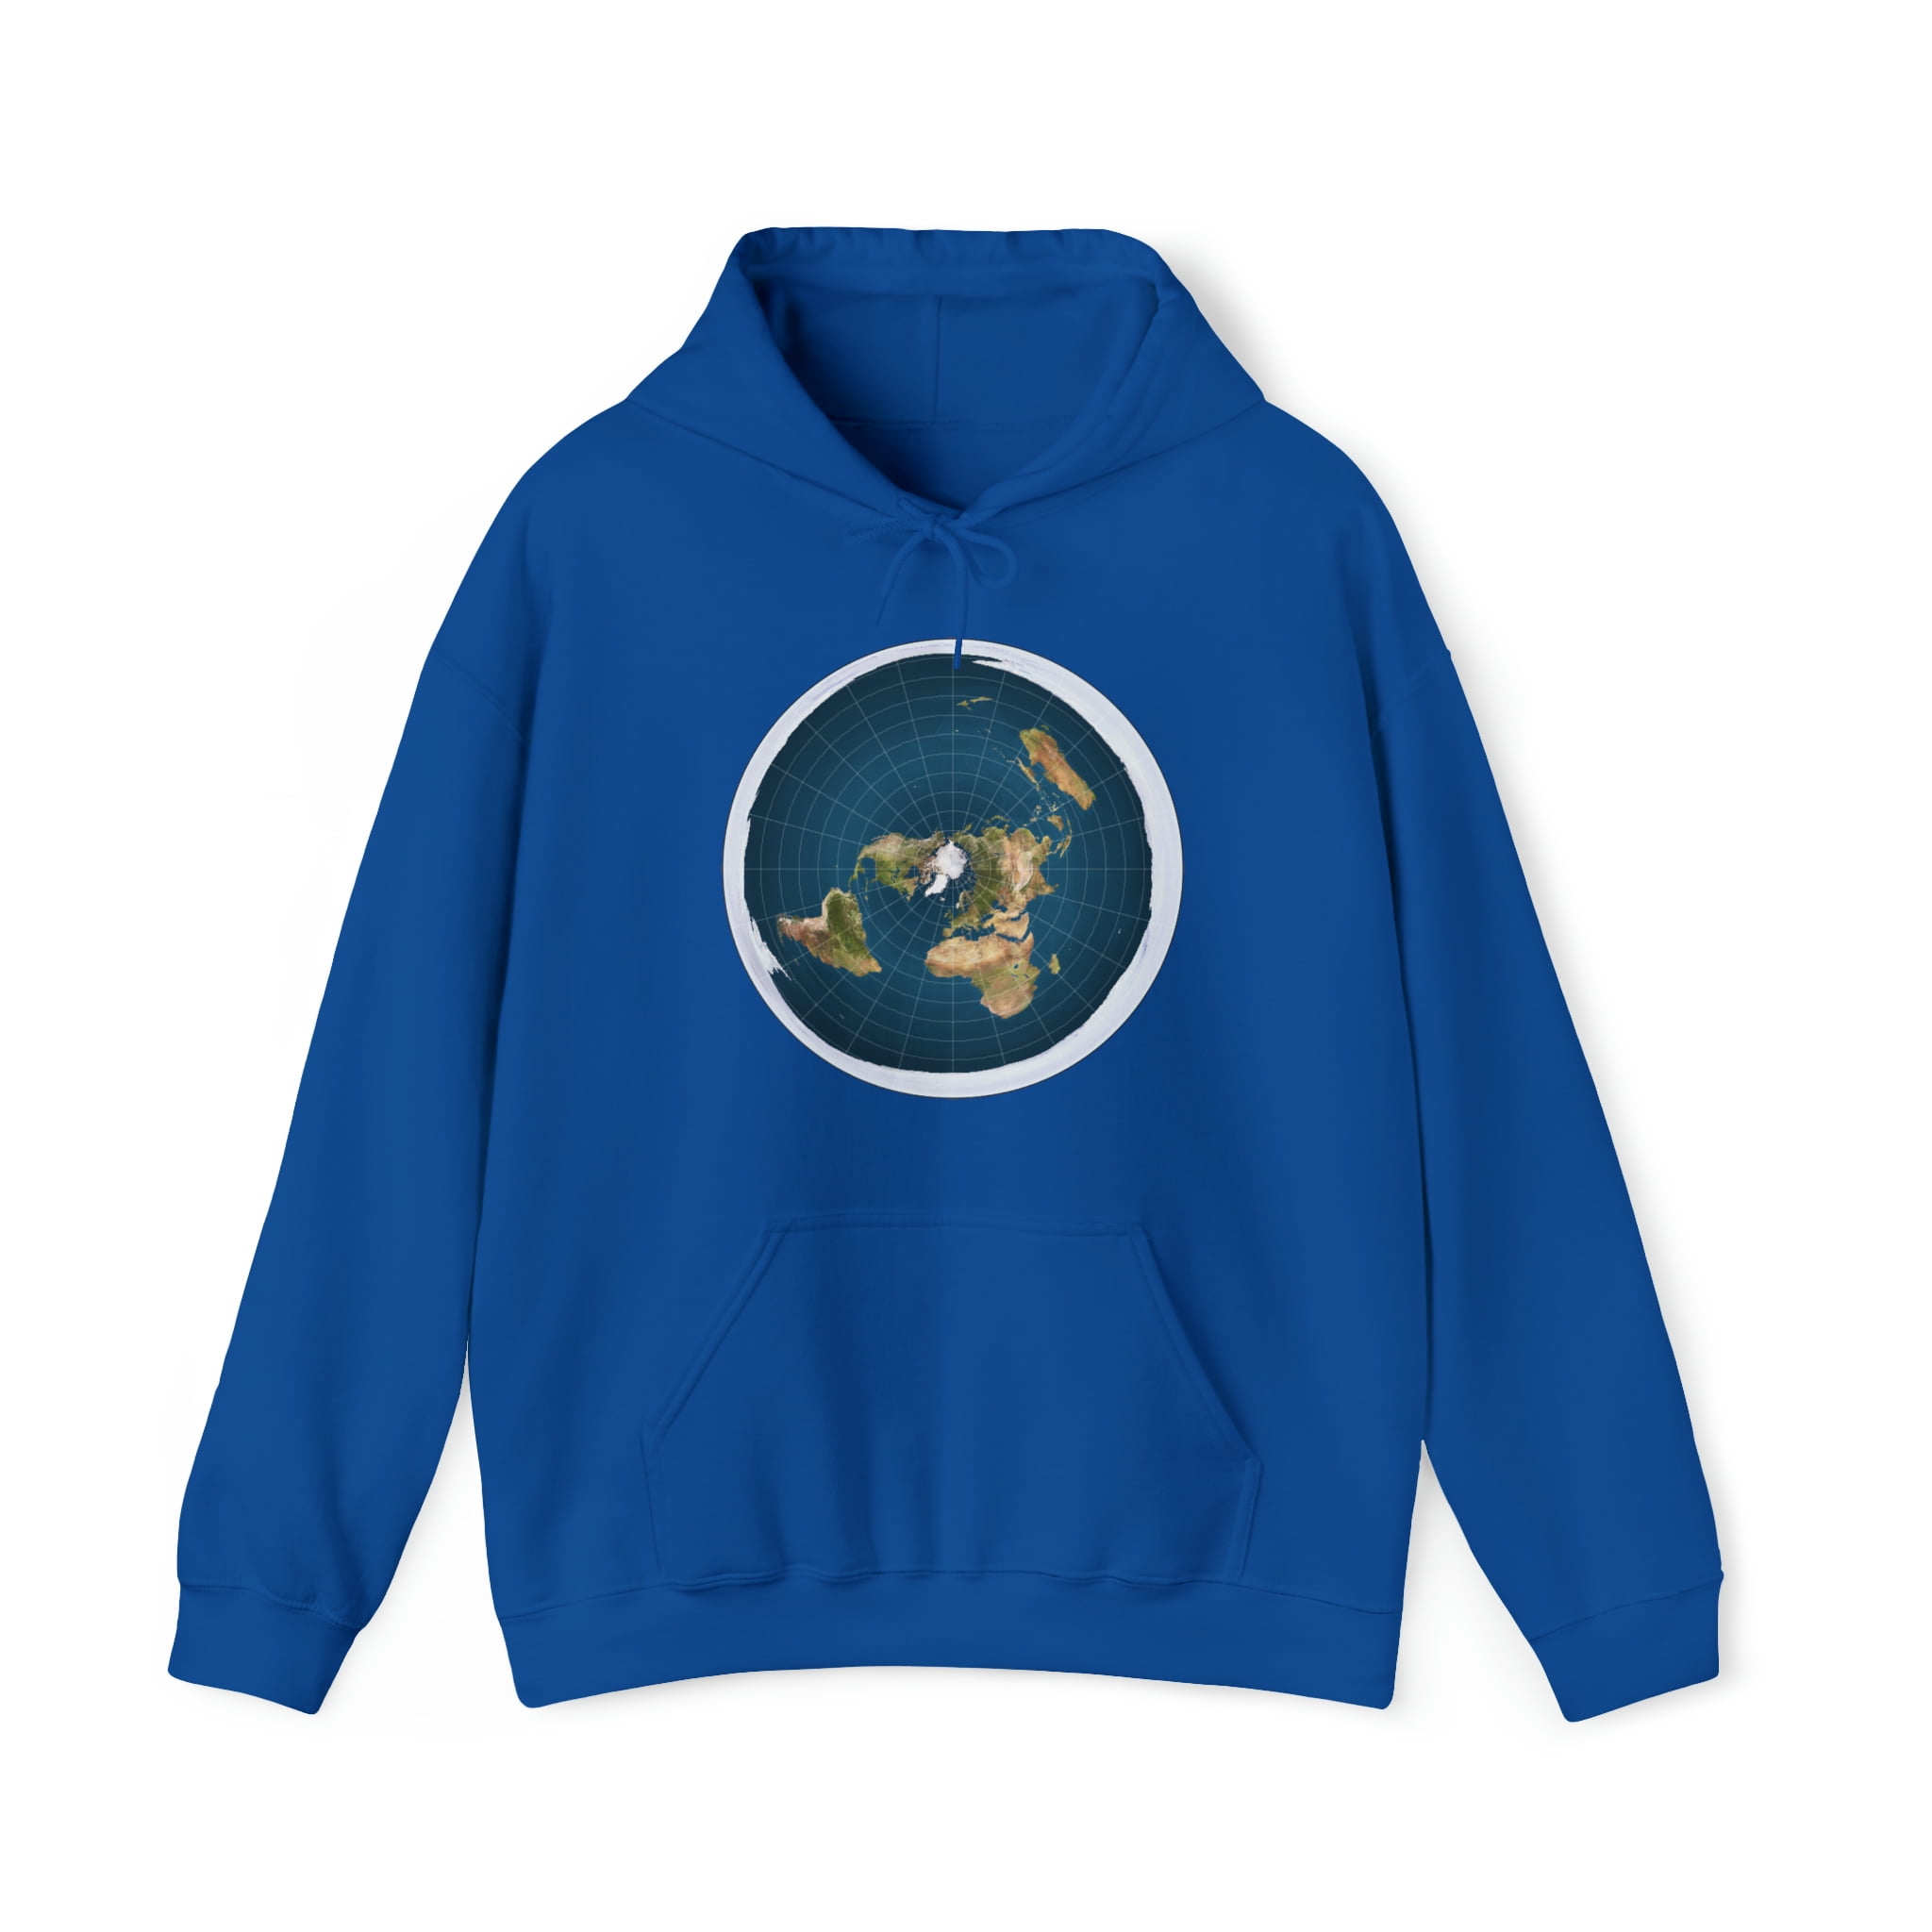 Flat Earth Graphic Hoodie Sweatshirt, Sizes S-5XL 